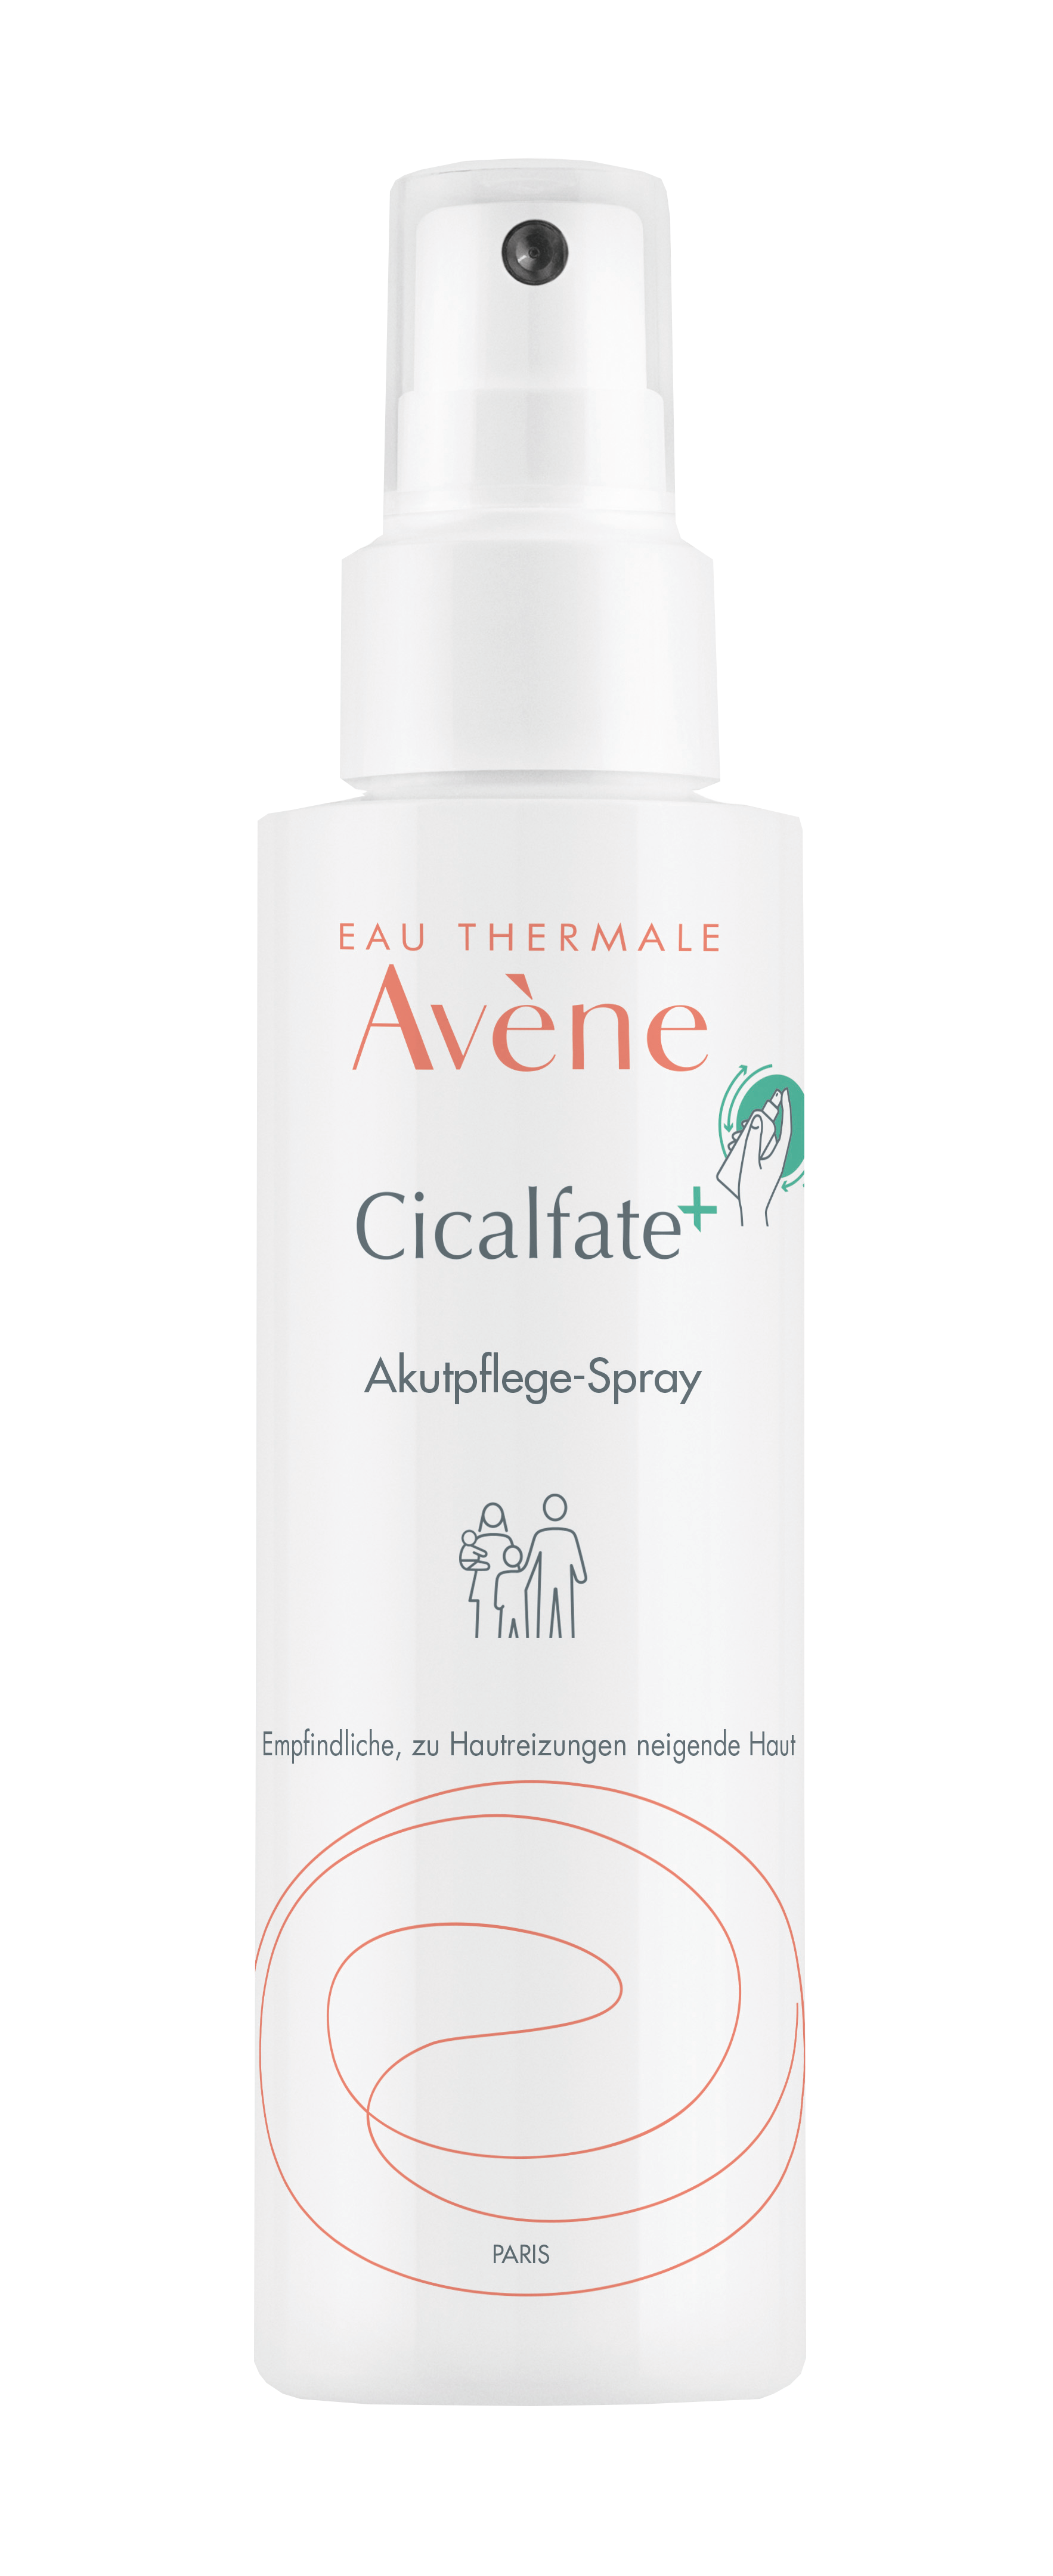 Eau Thermale Avène – Cicalfate+ Akutpflege-Spray 